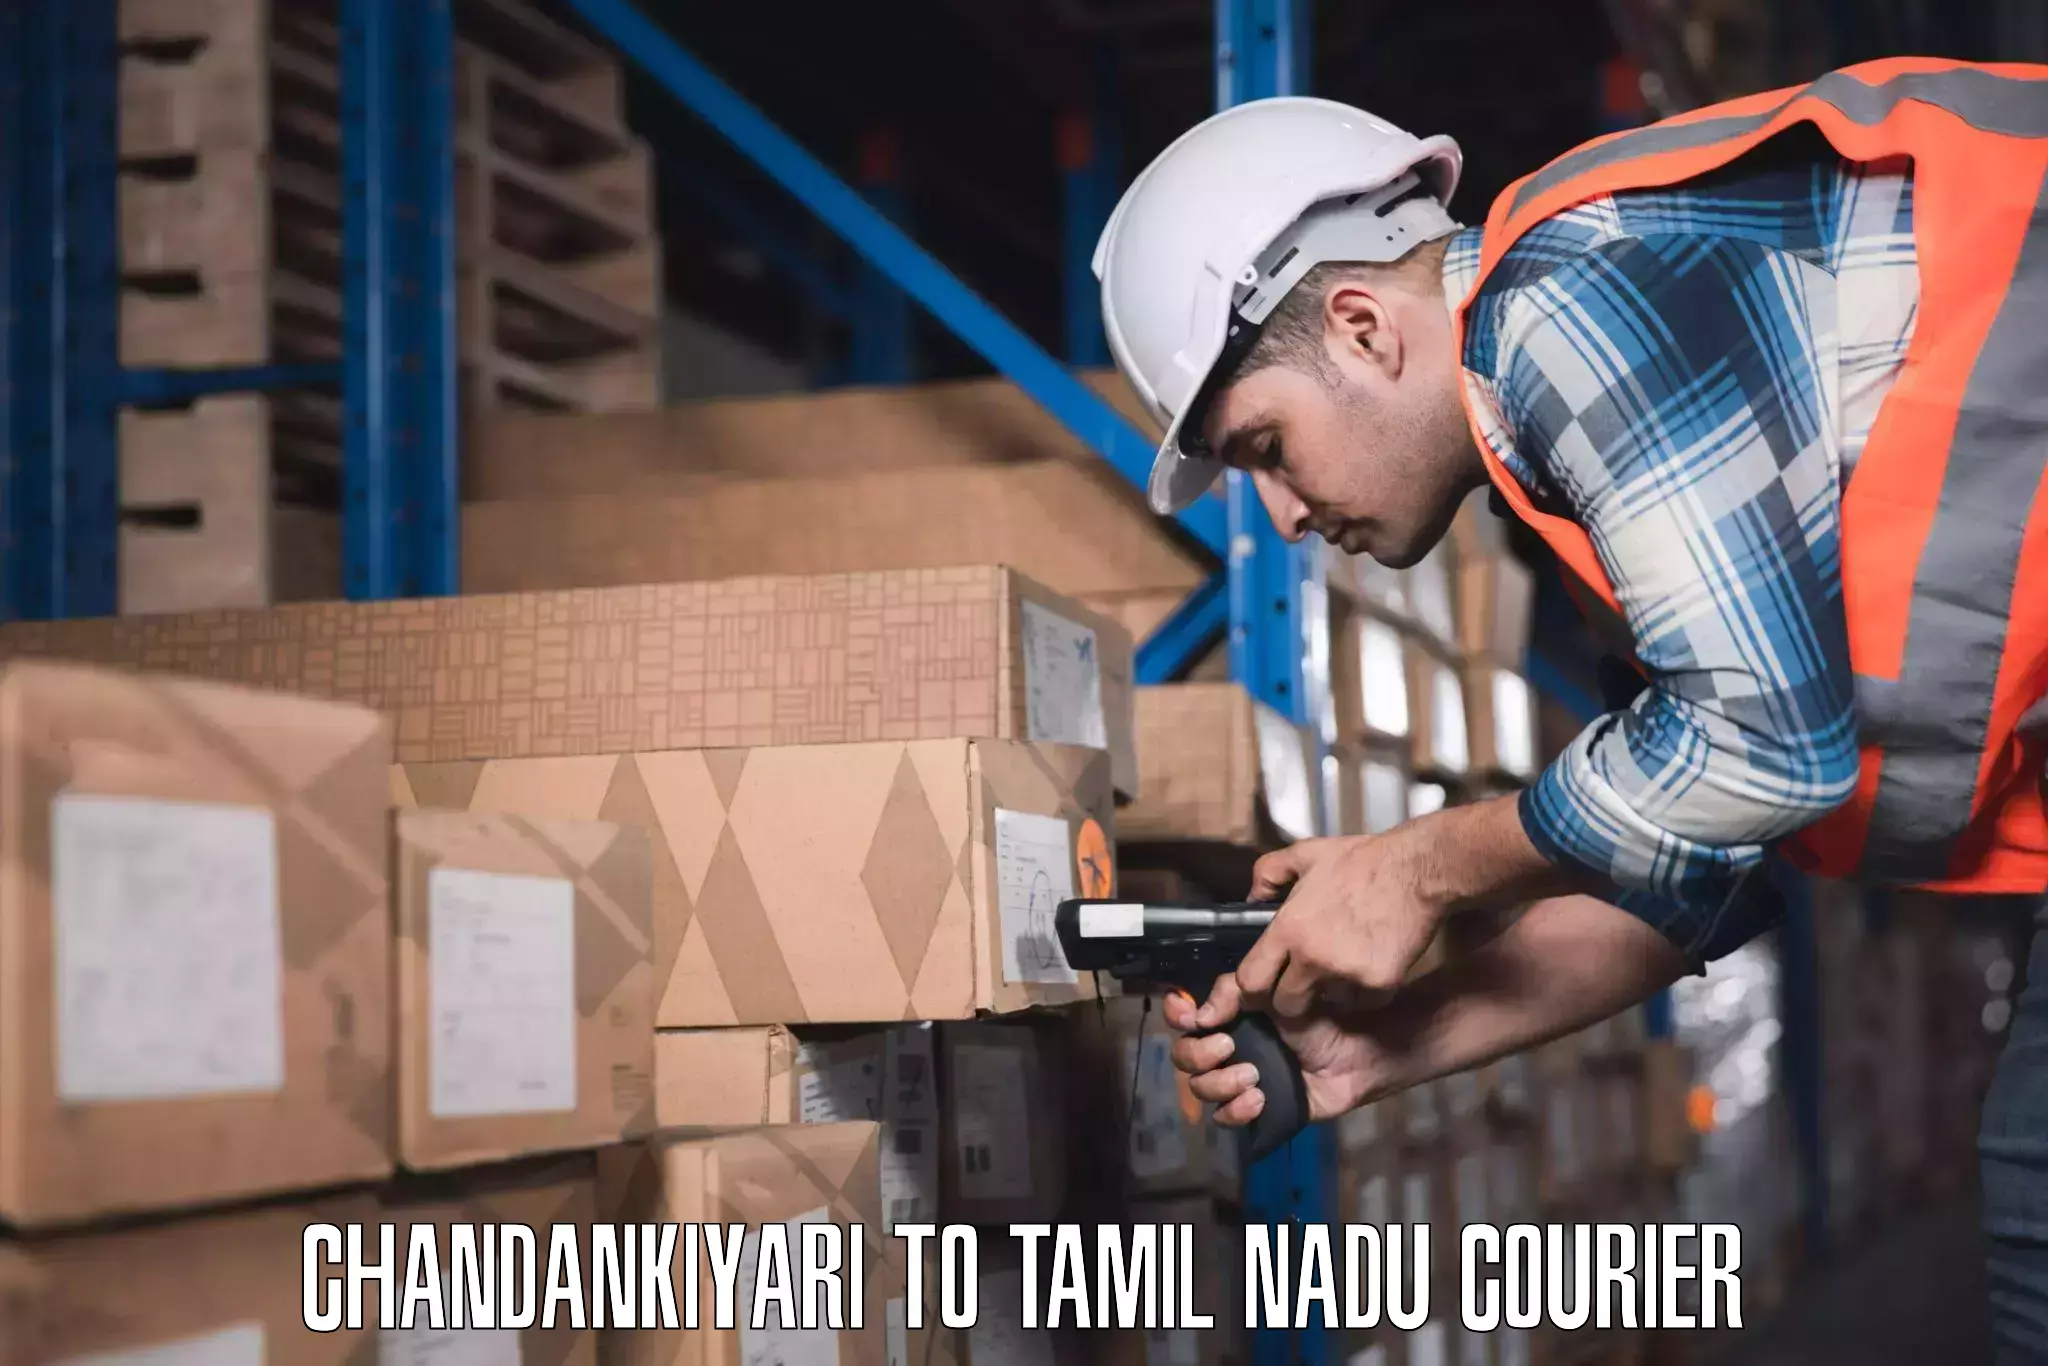 Luggage shipment specialists Chandankiyari to Sri Ramachandra Institute of Higher Education and Research Chennai